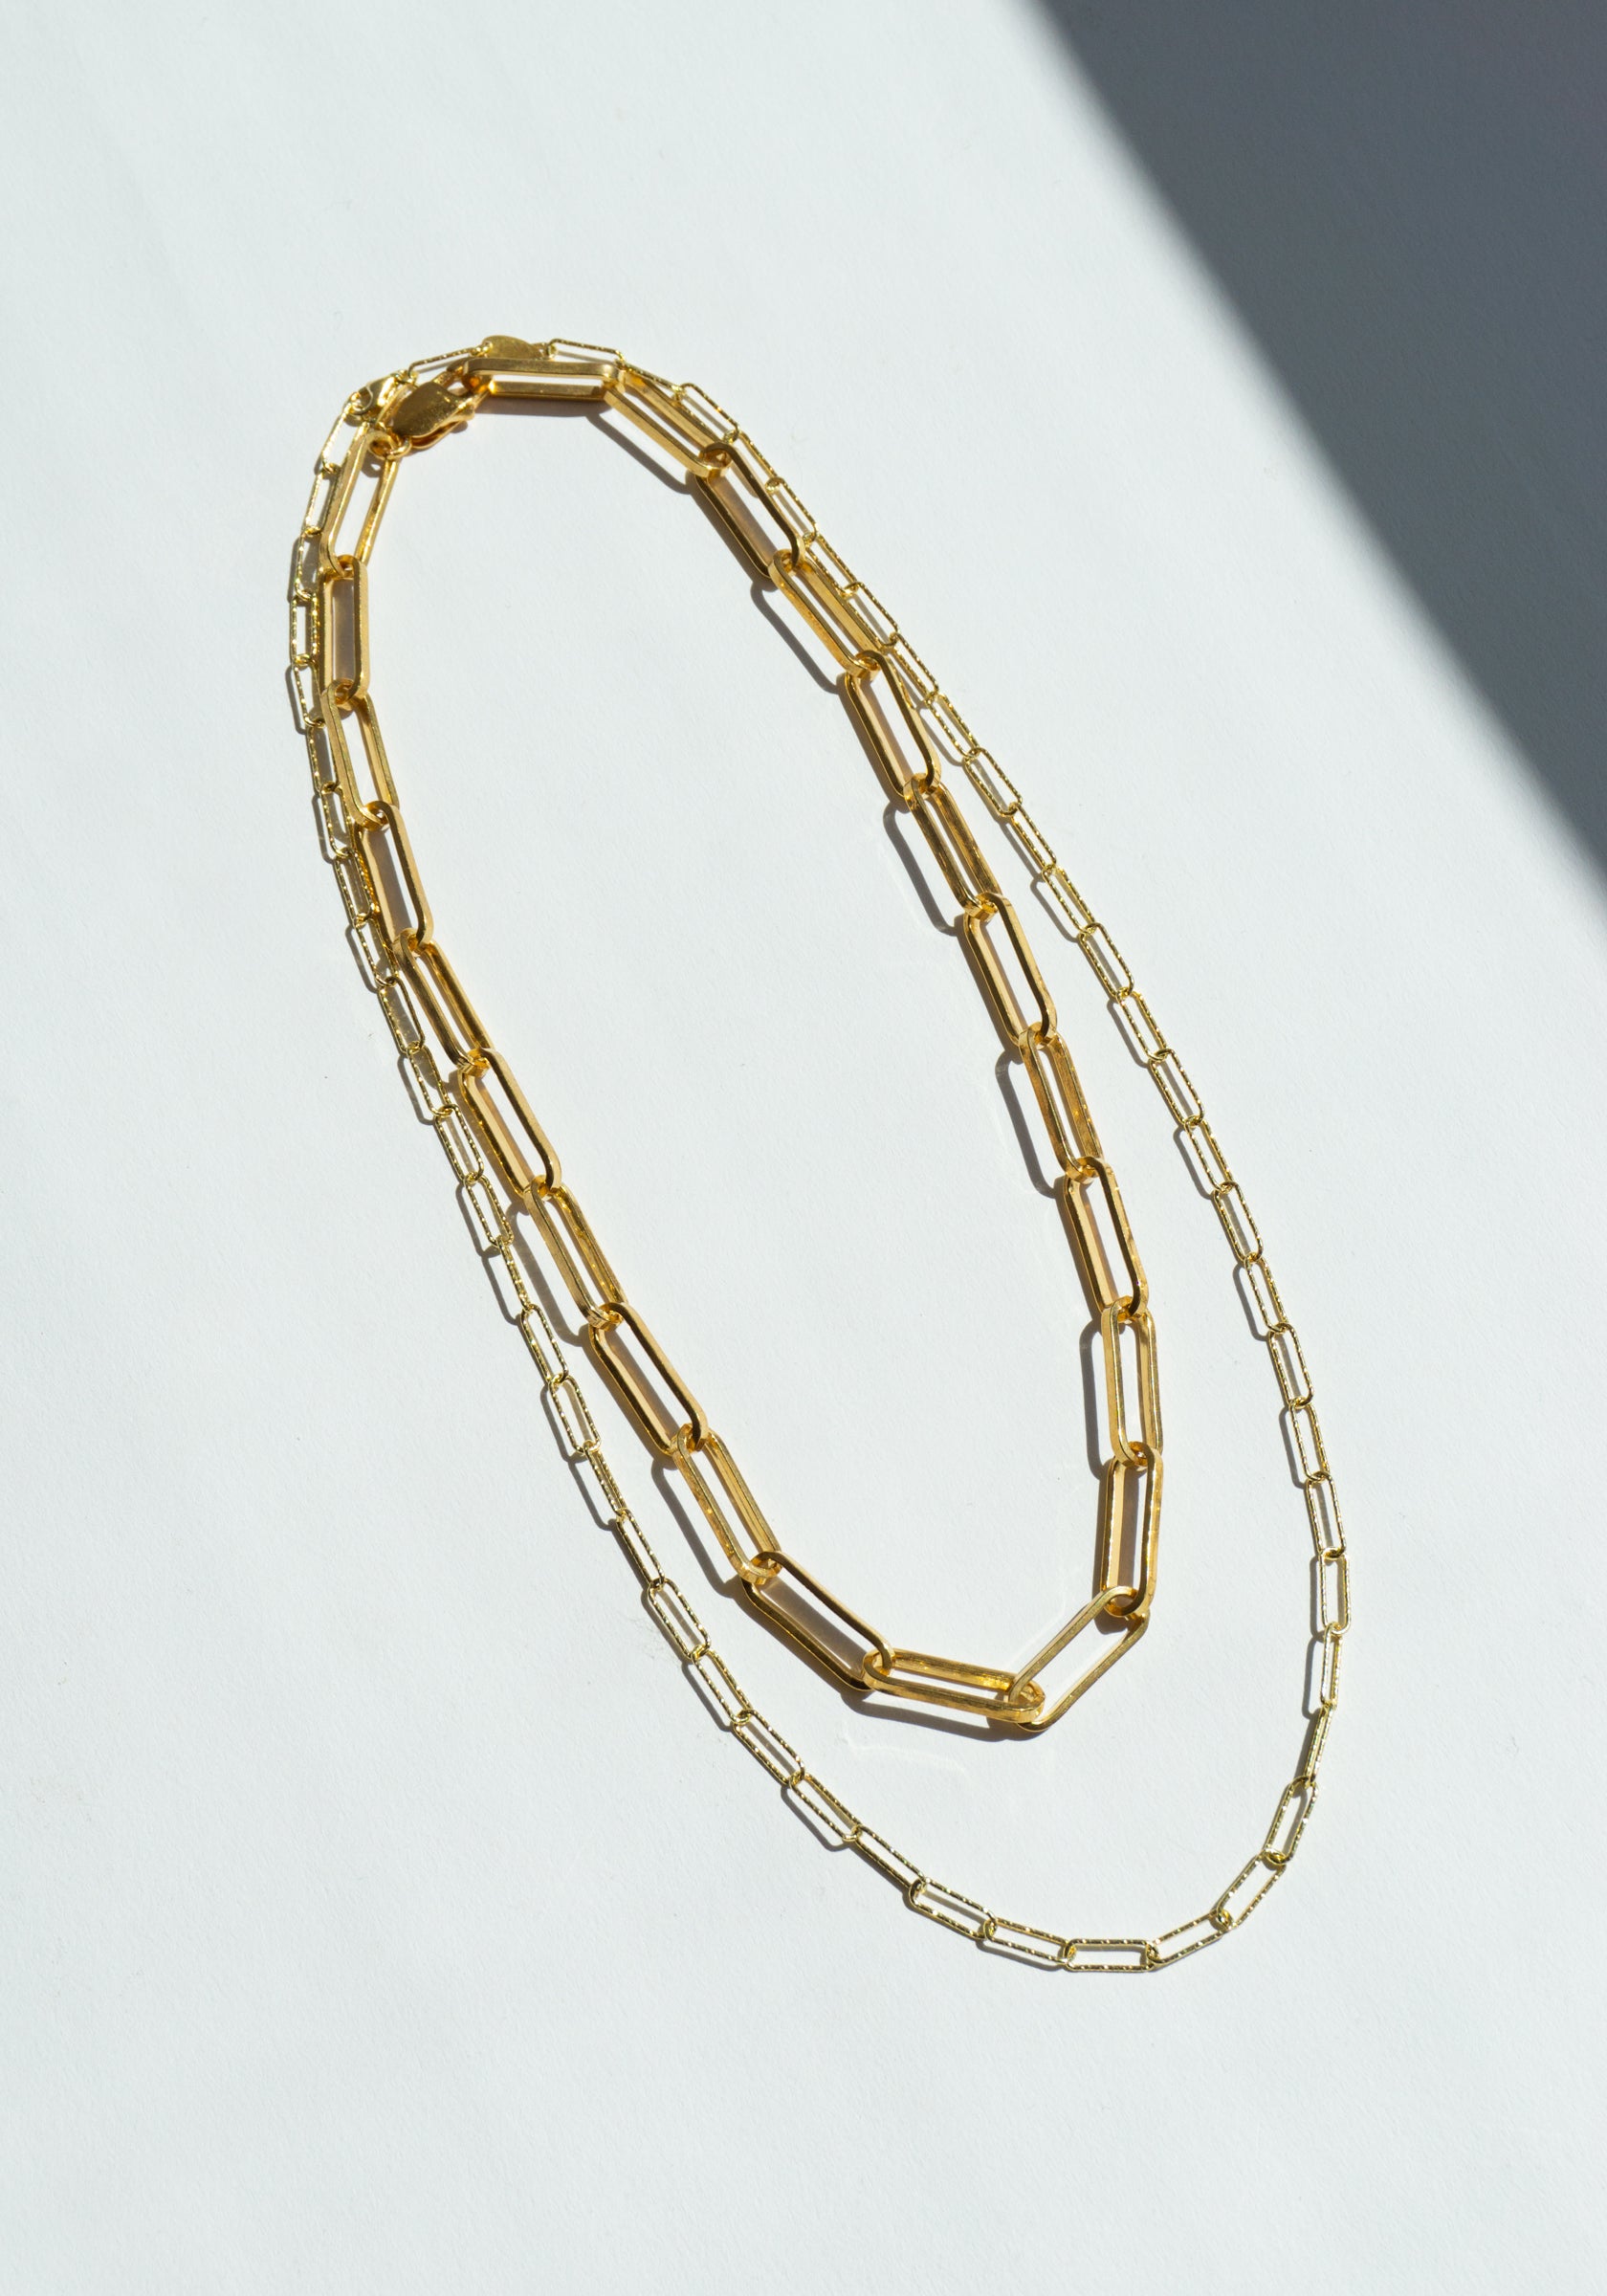 Hermina Athens Zena Chain Necklace